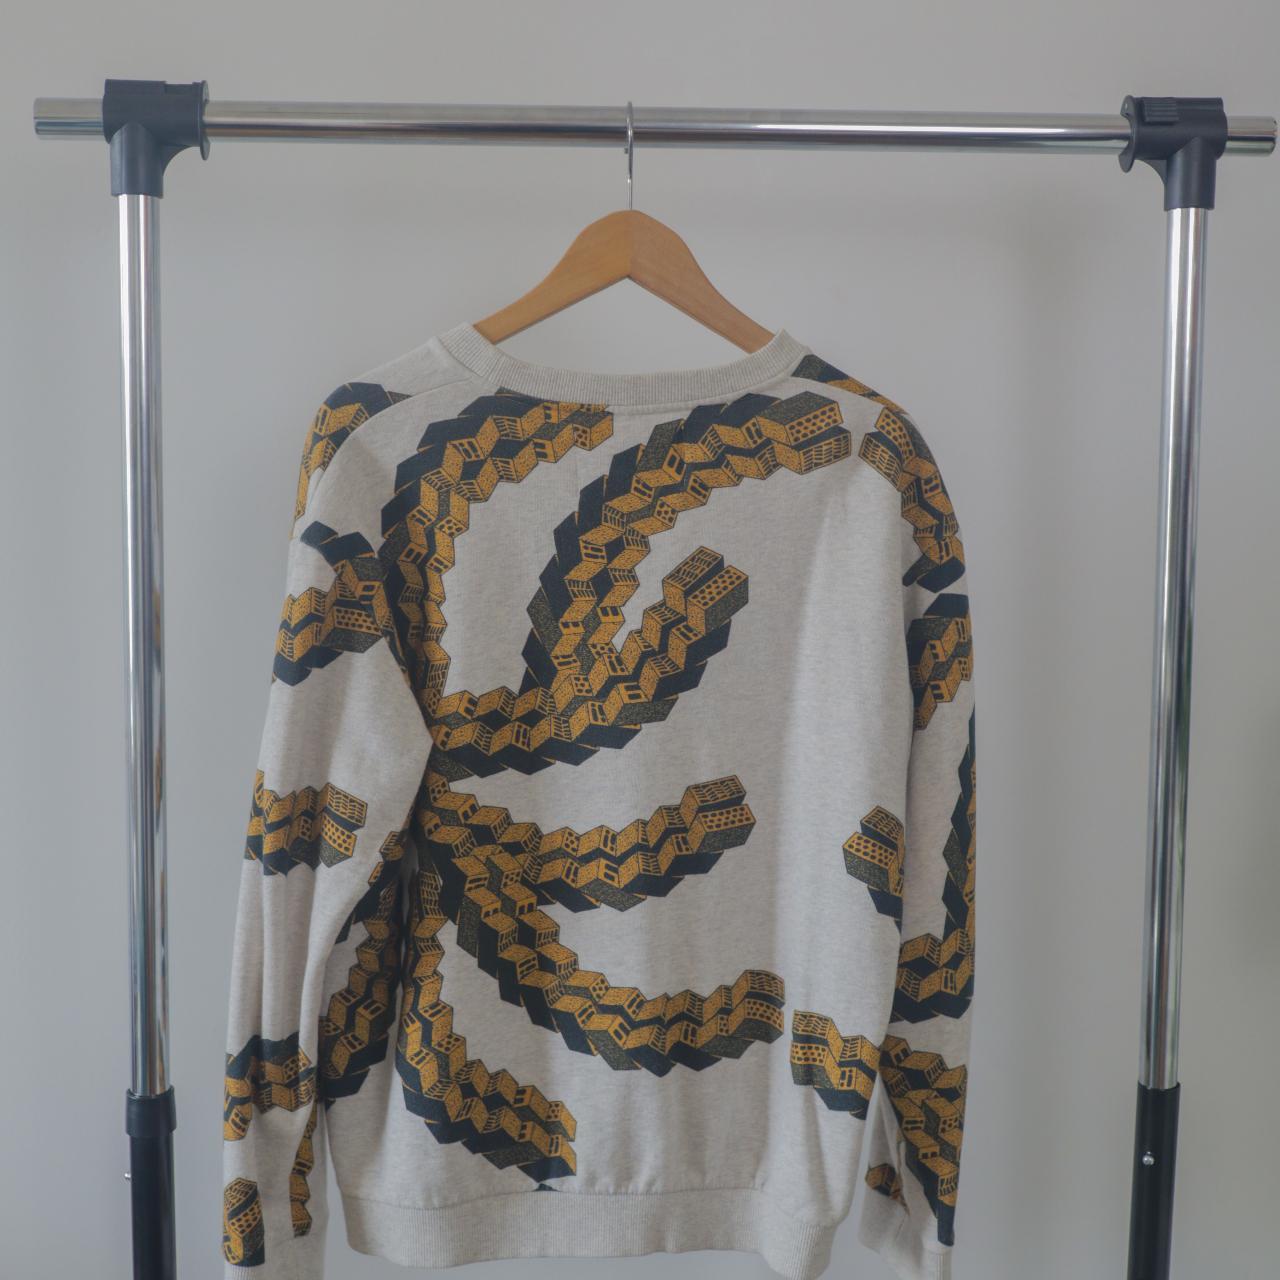 Product Image 4 - Henrik Vibskov printed Sweater. The